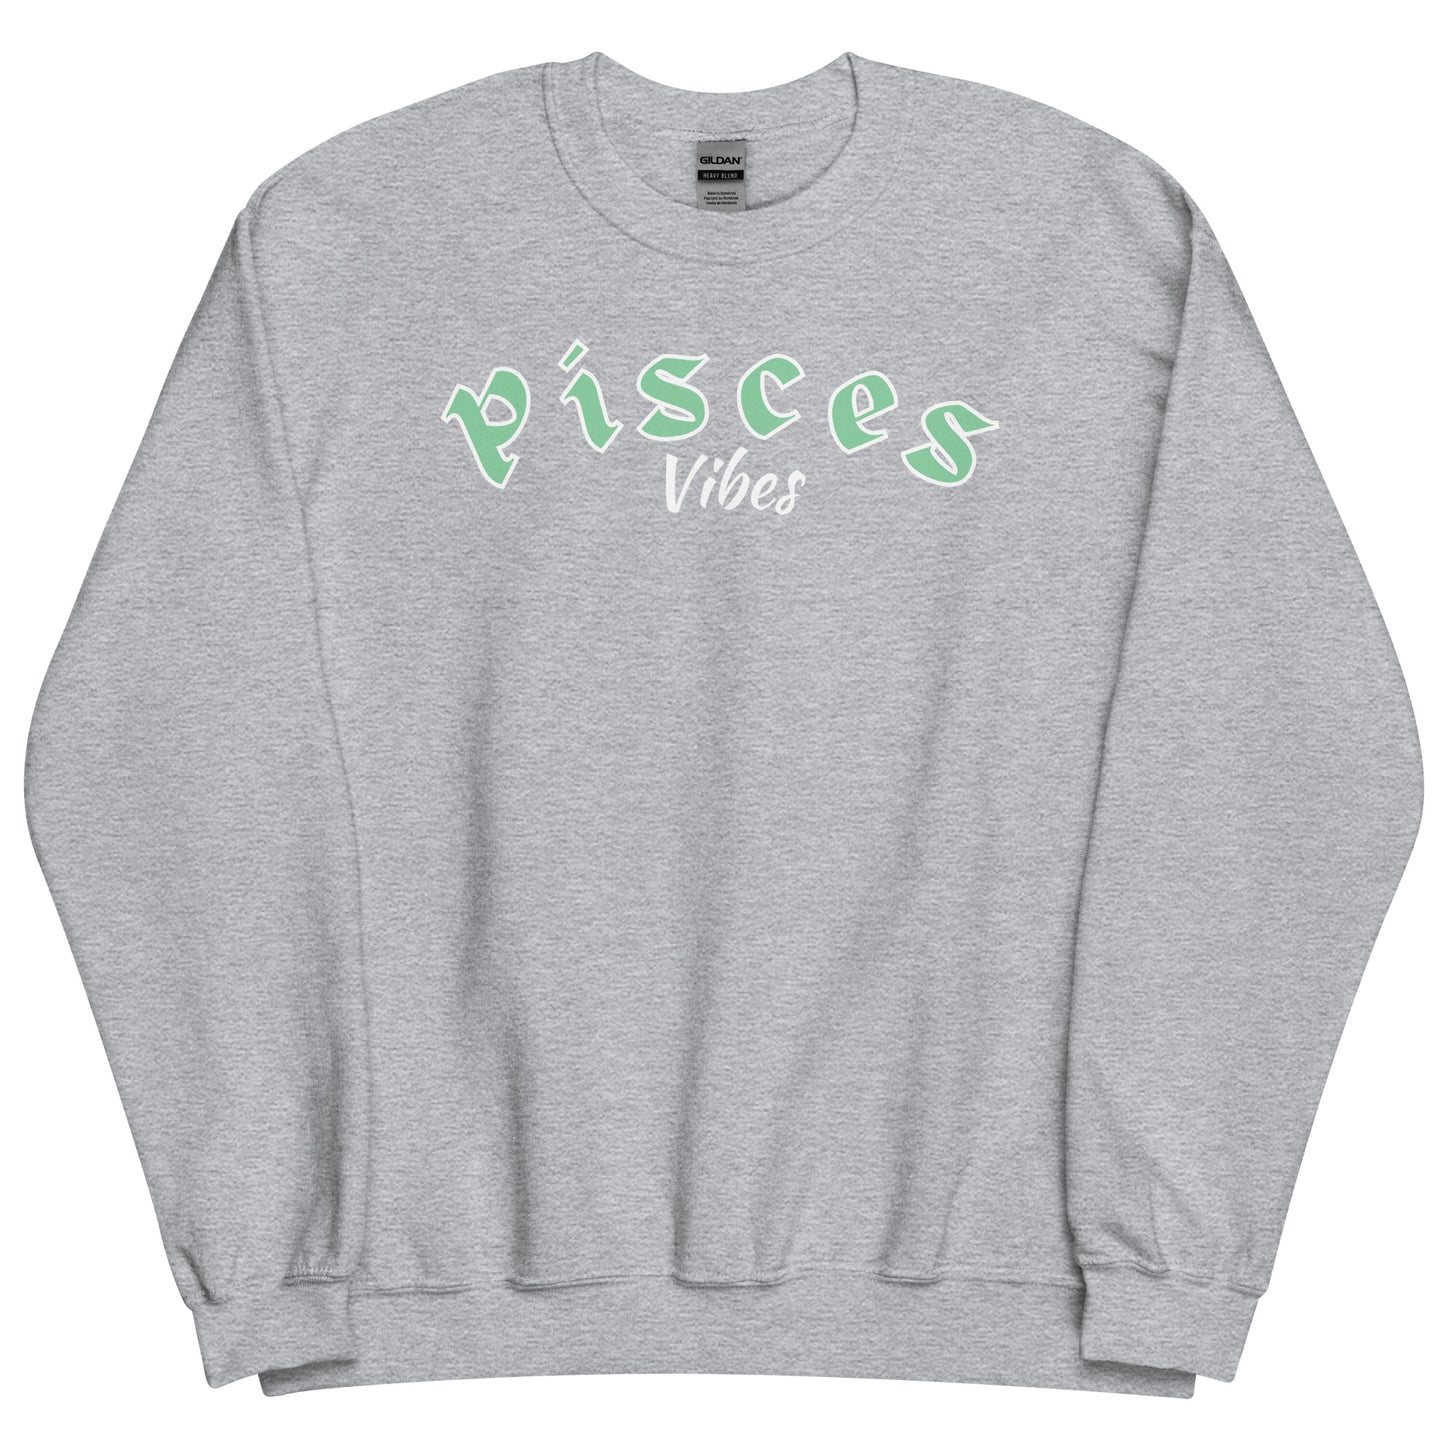 Pisces Zodiac Sign Unisex Sweatshirt